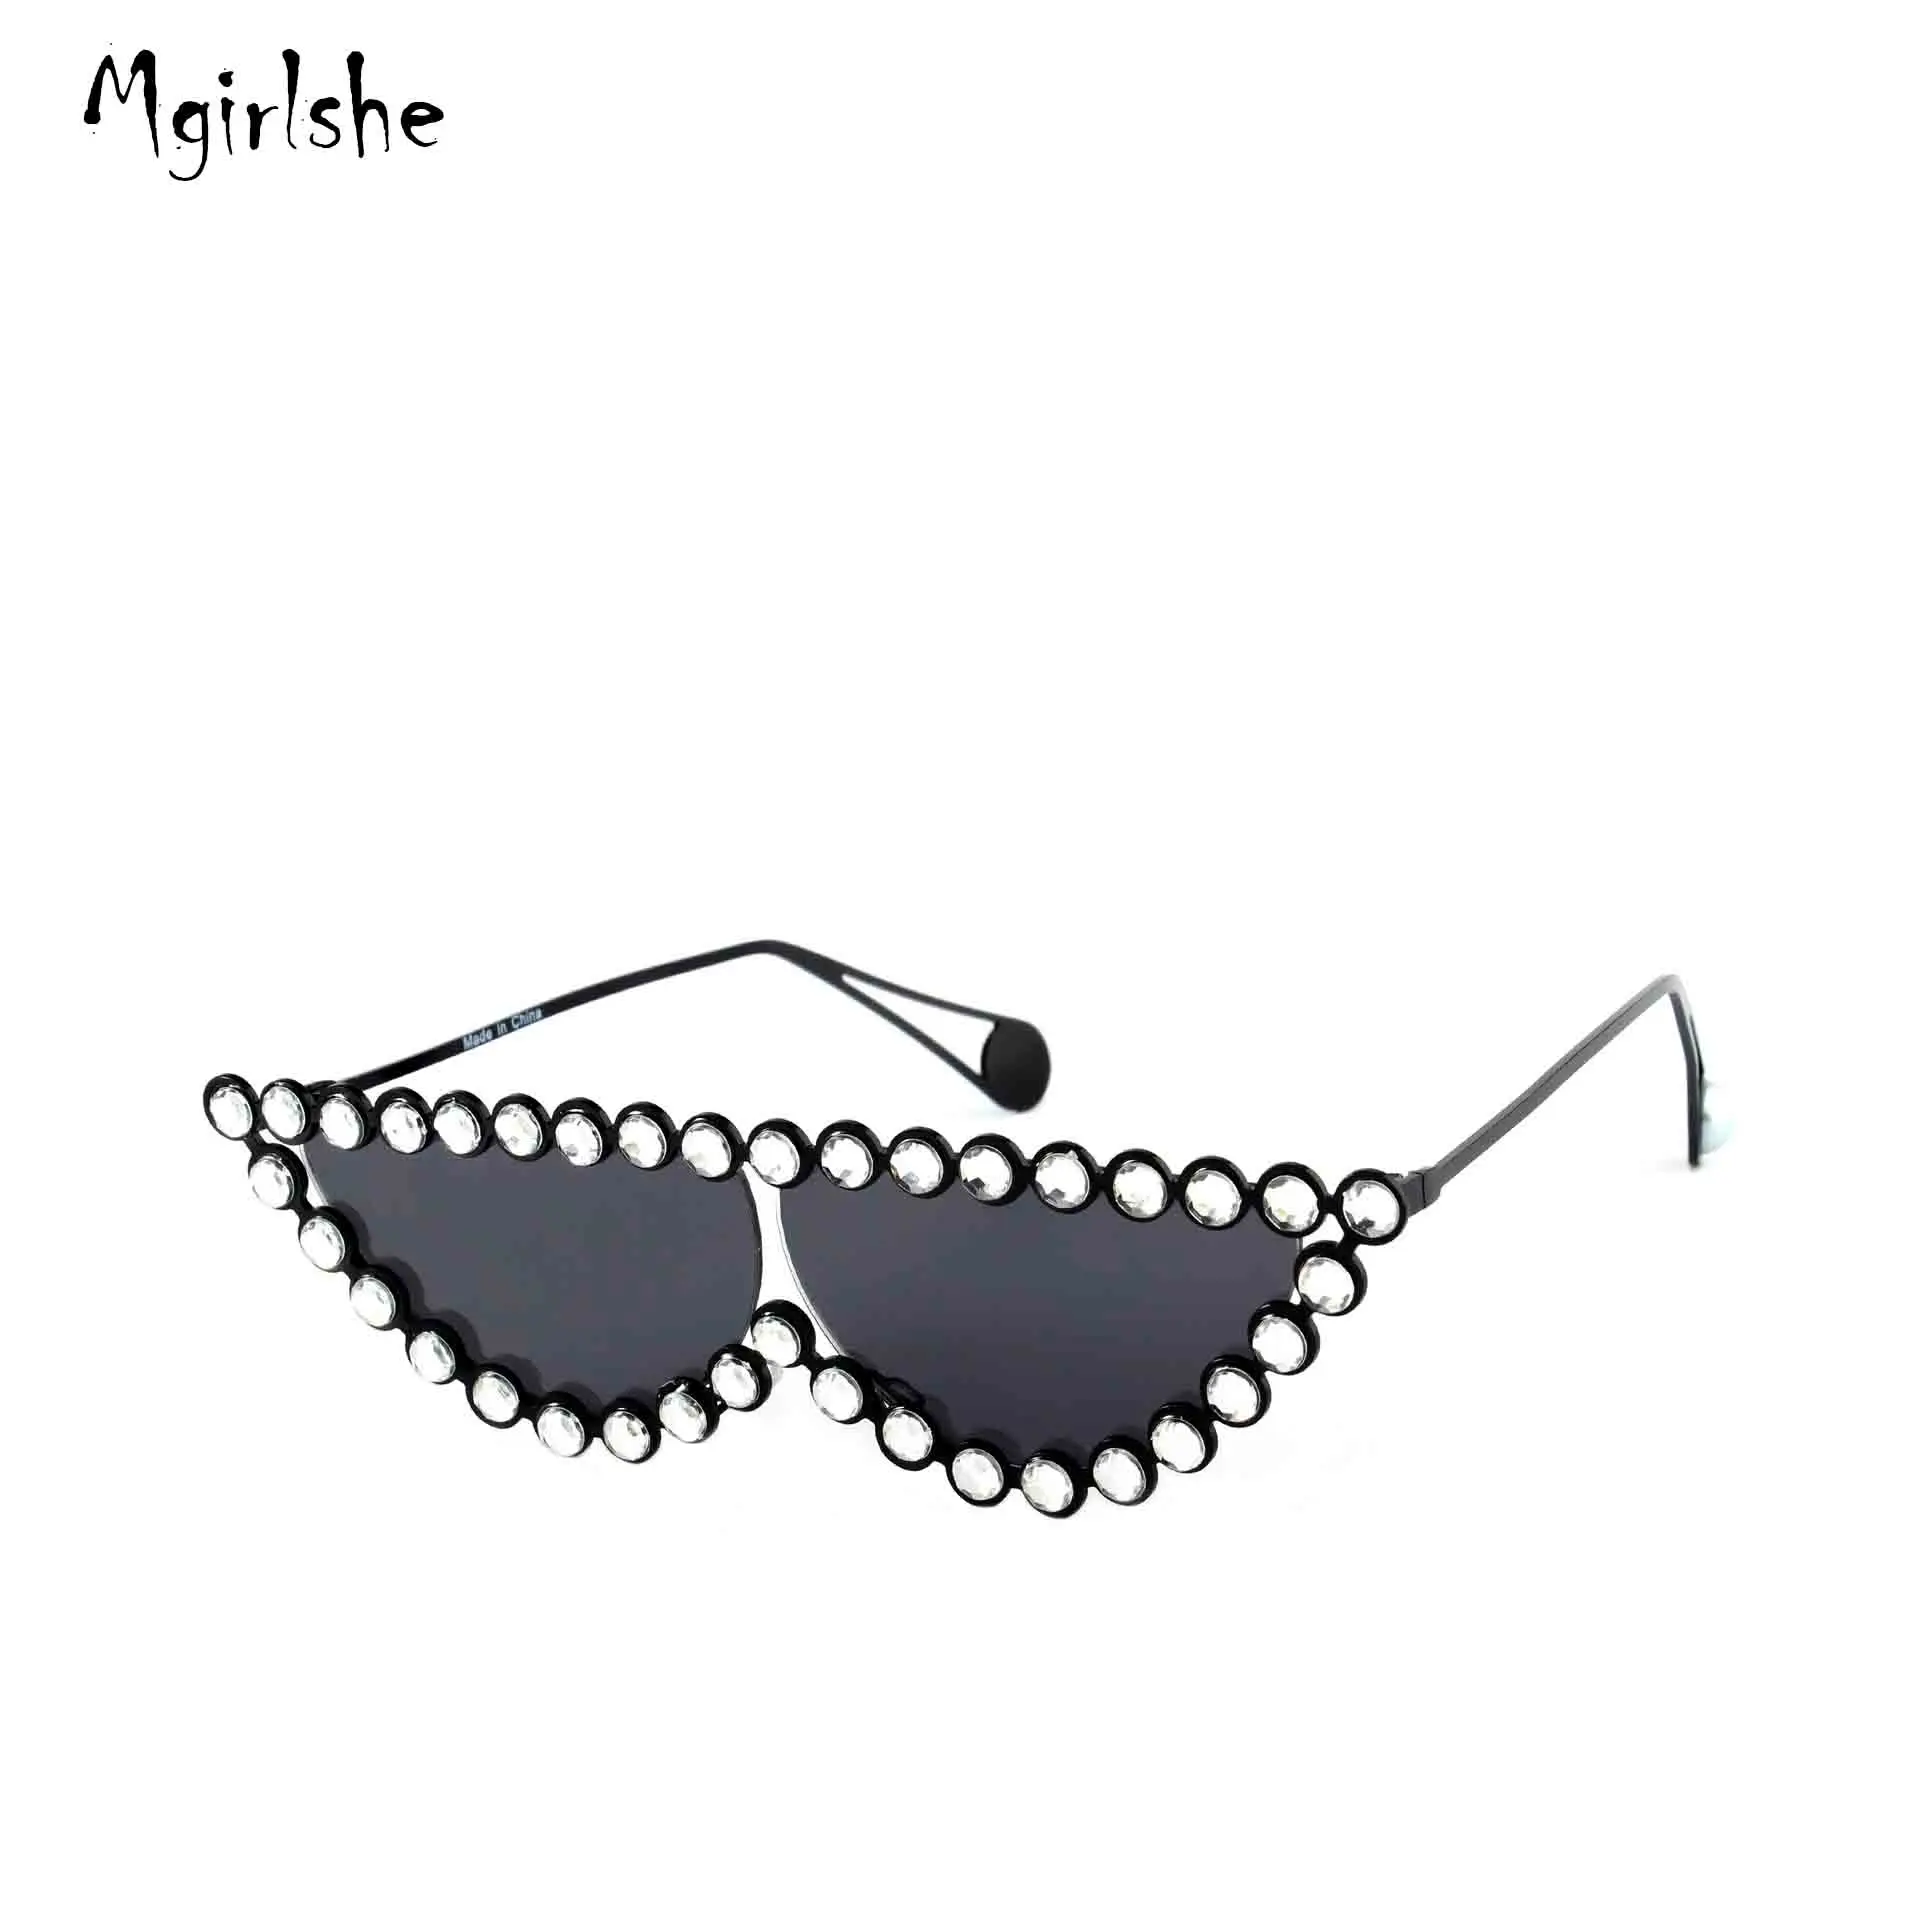 

Mgirlshe Street Fashion Vintage Cat Eyes Blingbling Crystal Sunglasses Sun Protection Rhinestone Sparkling Frame Sunglasses, 7 colors